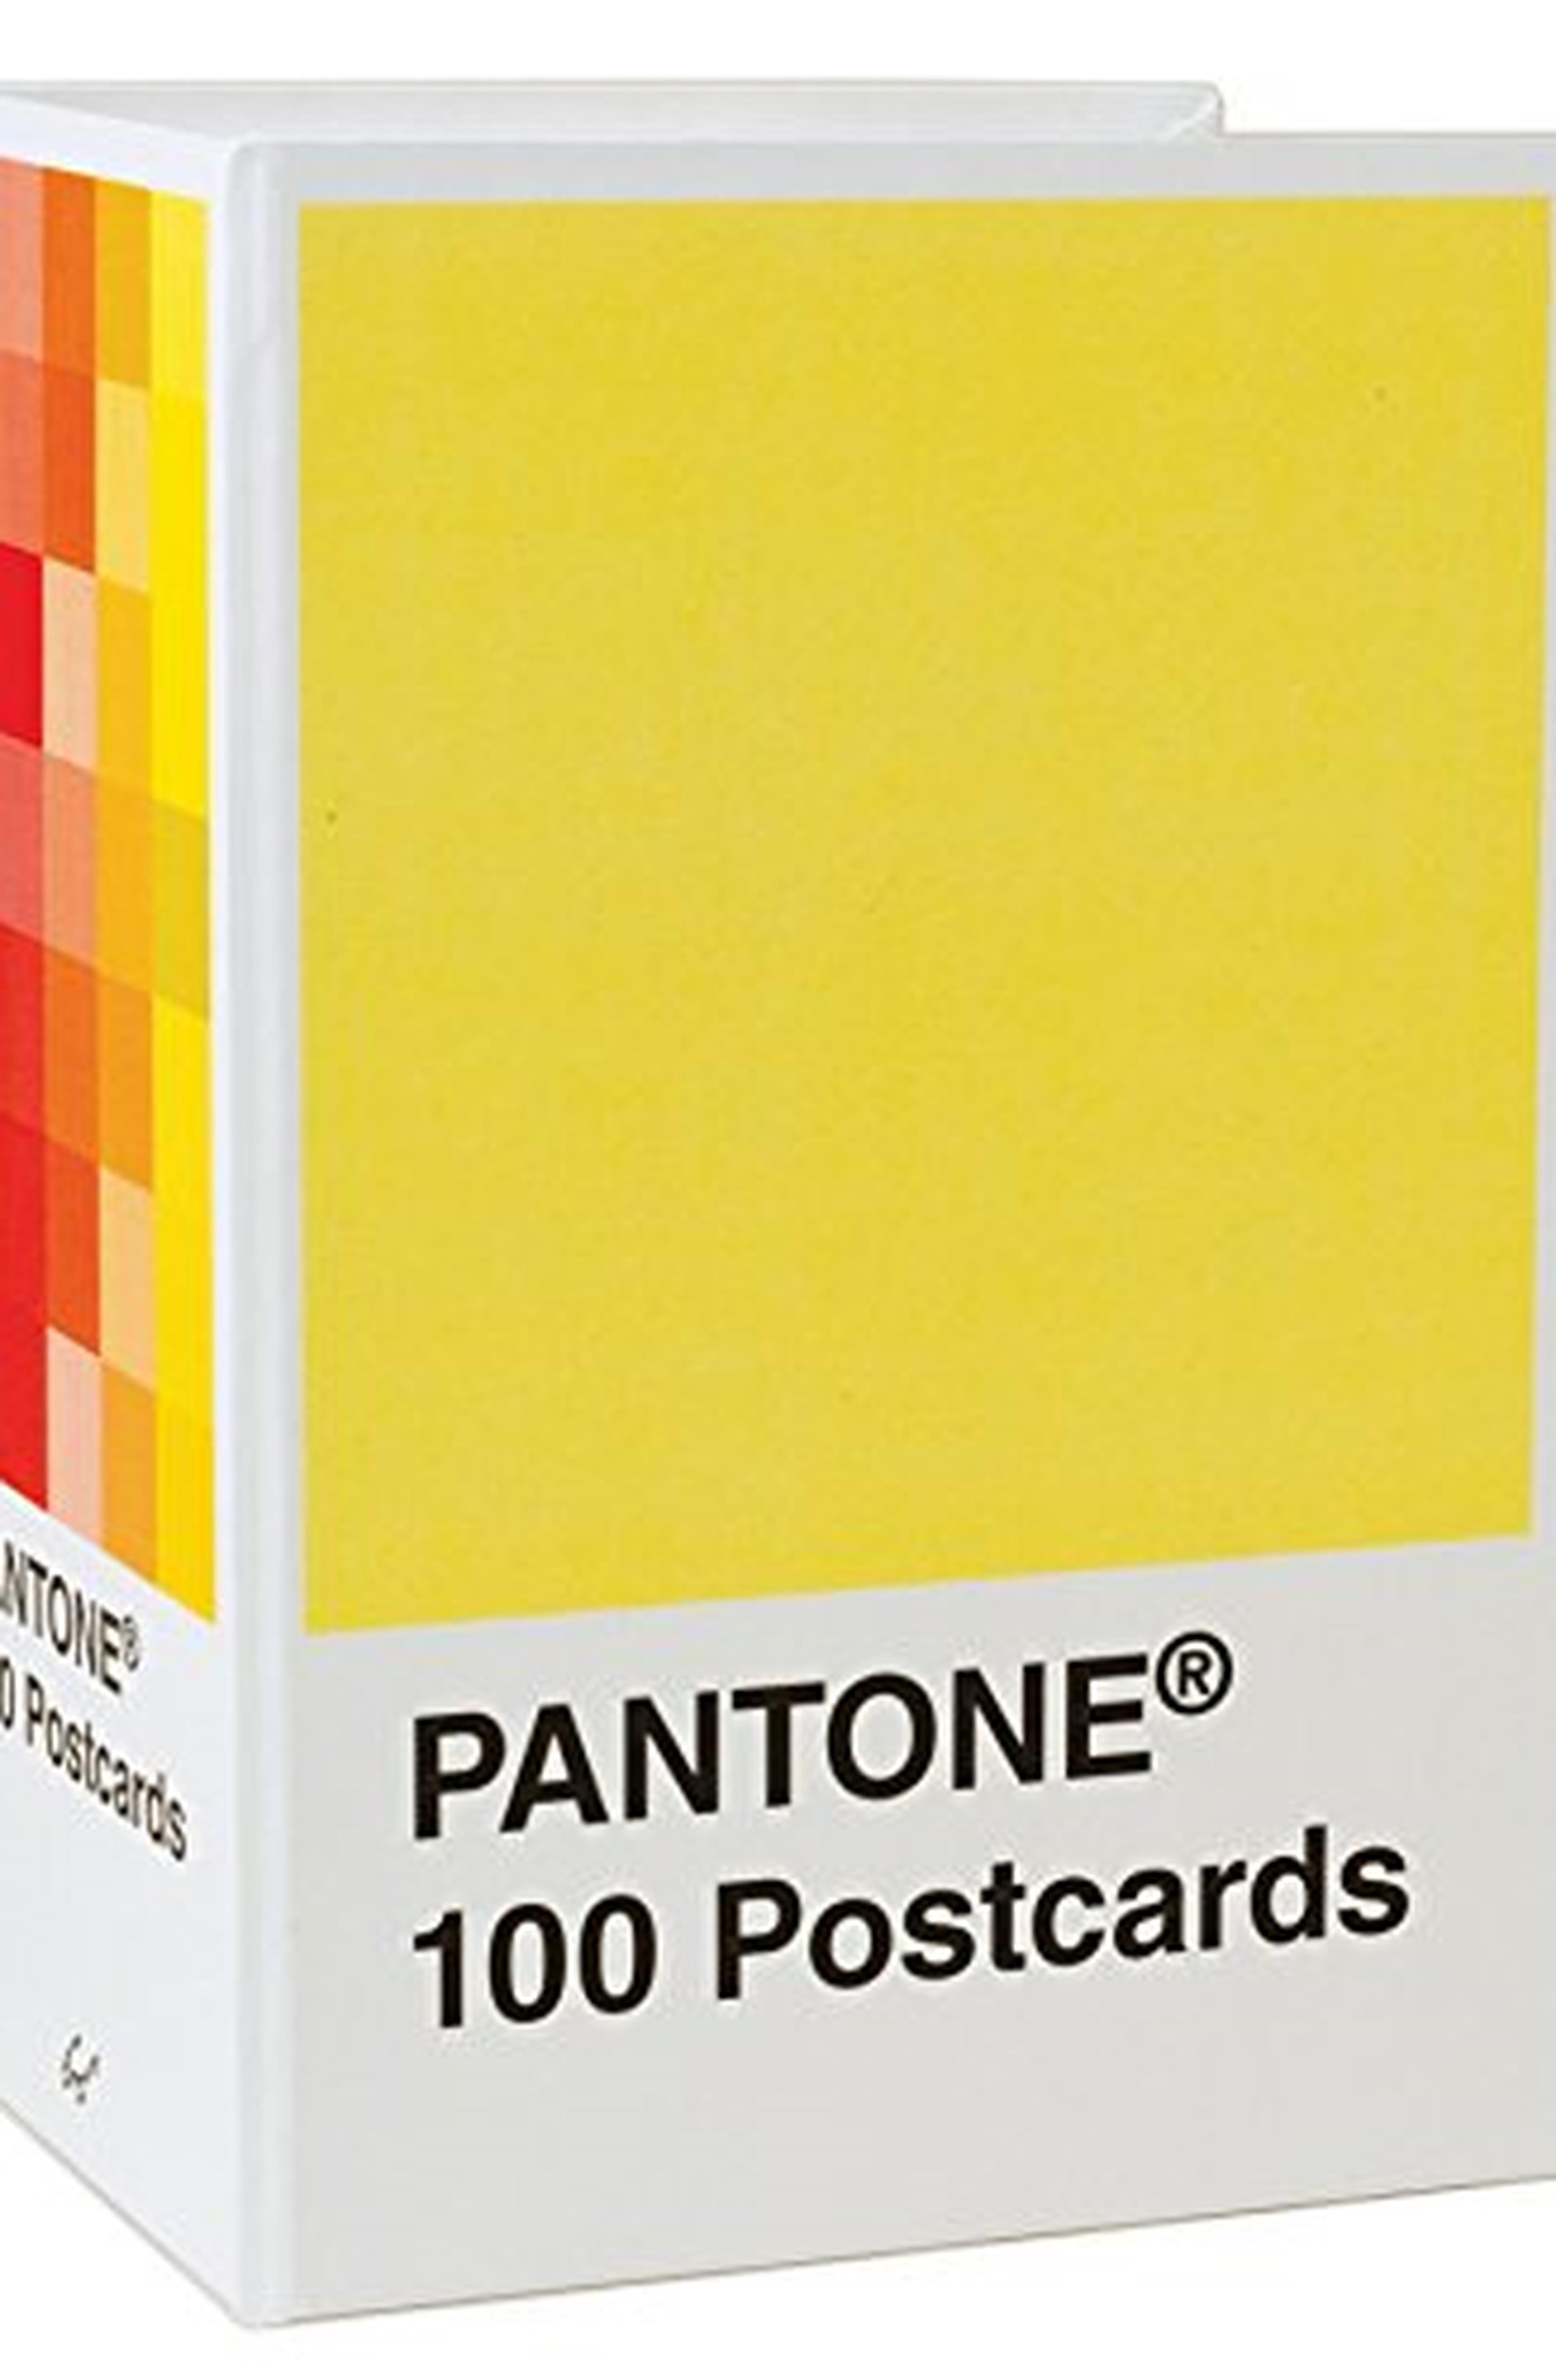 Pantone Postcard Box: 100 Postcards by Pantone Inc. (2011-06-22)